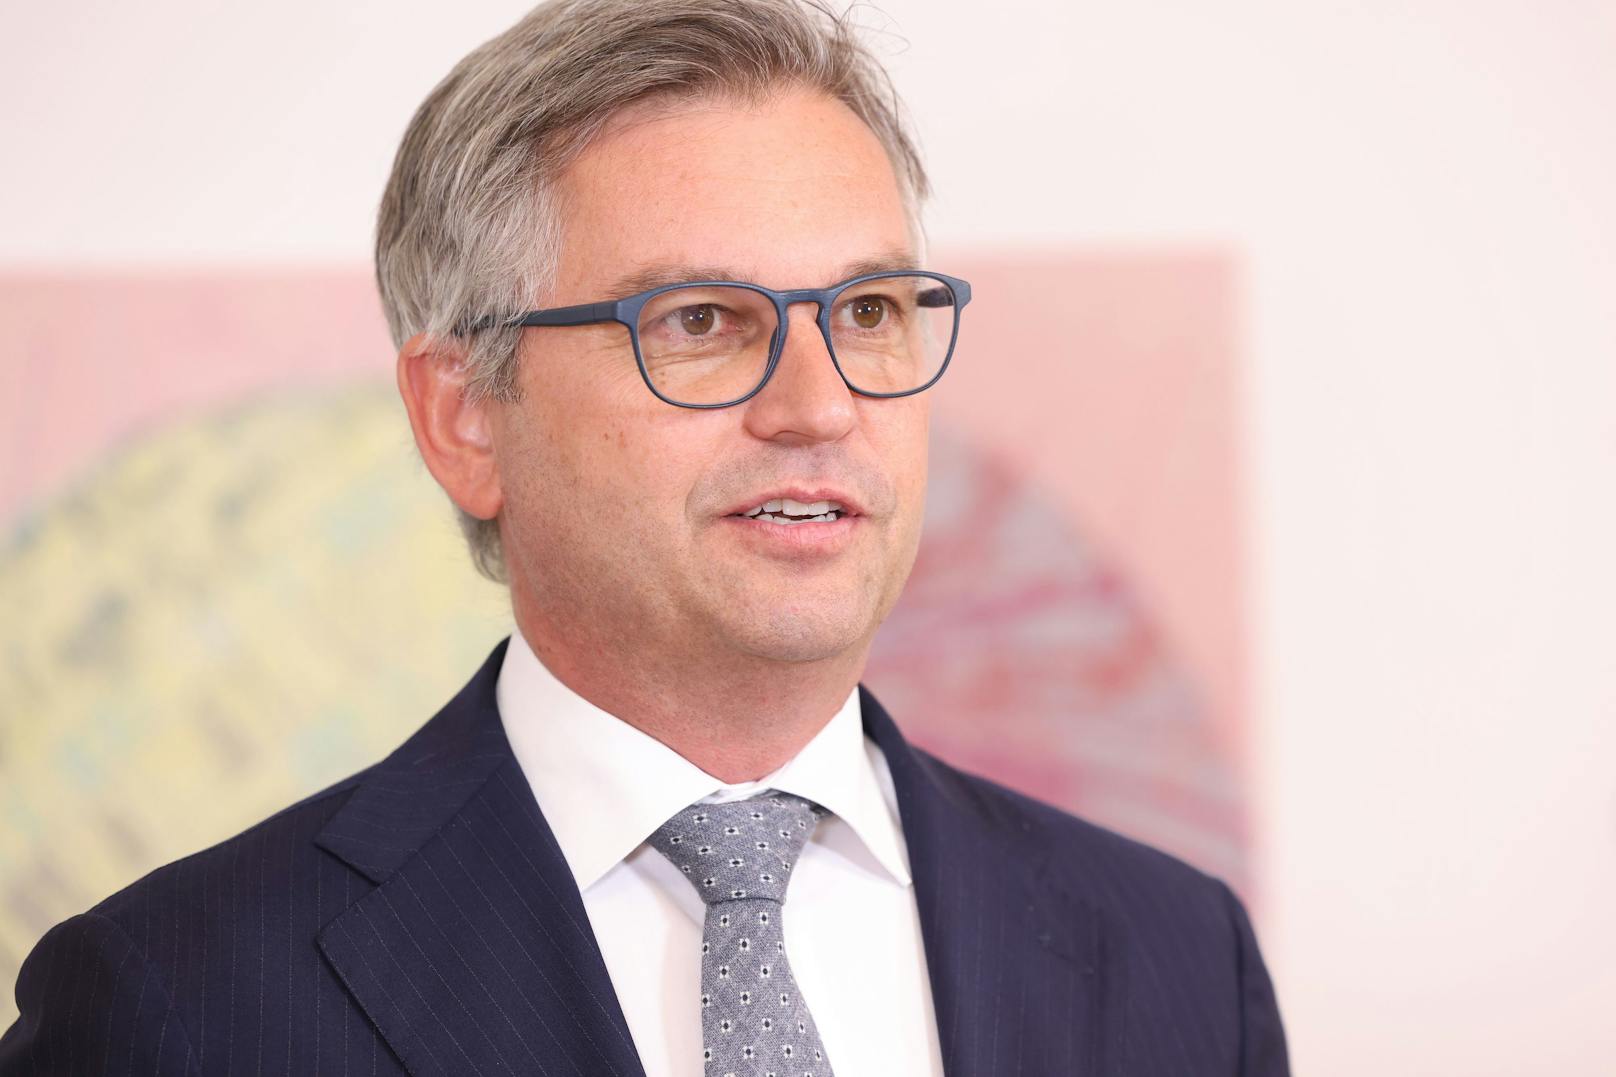 Finanzminister Magnus Brunner (ÖVP) zu Besuch bei <em>"Heute"</em>